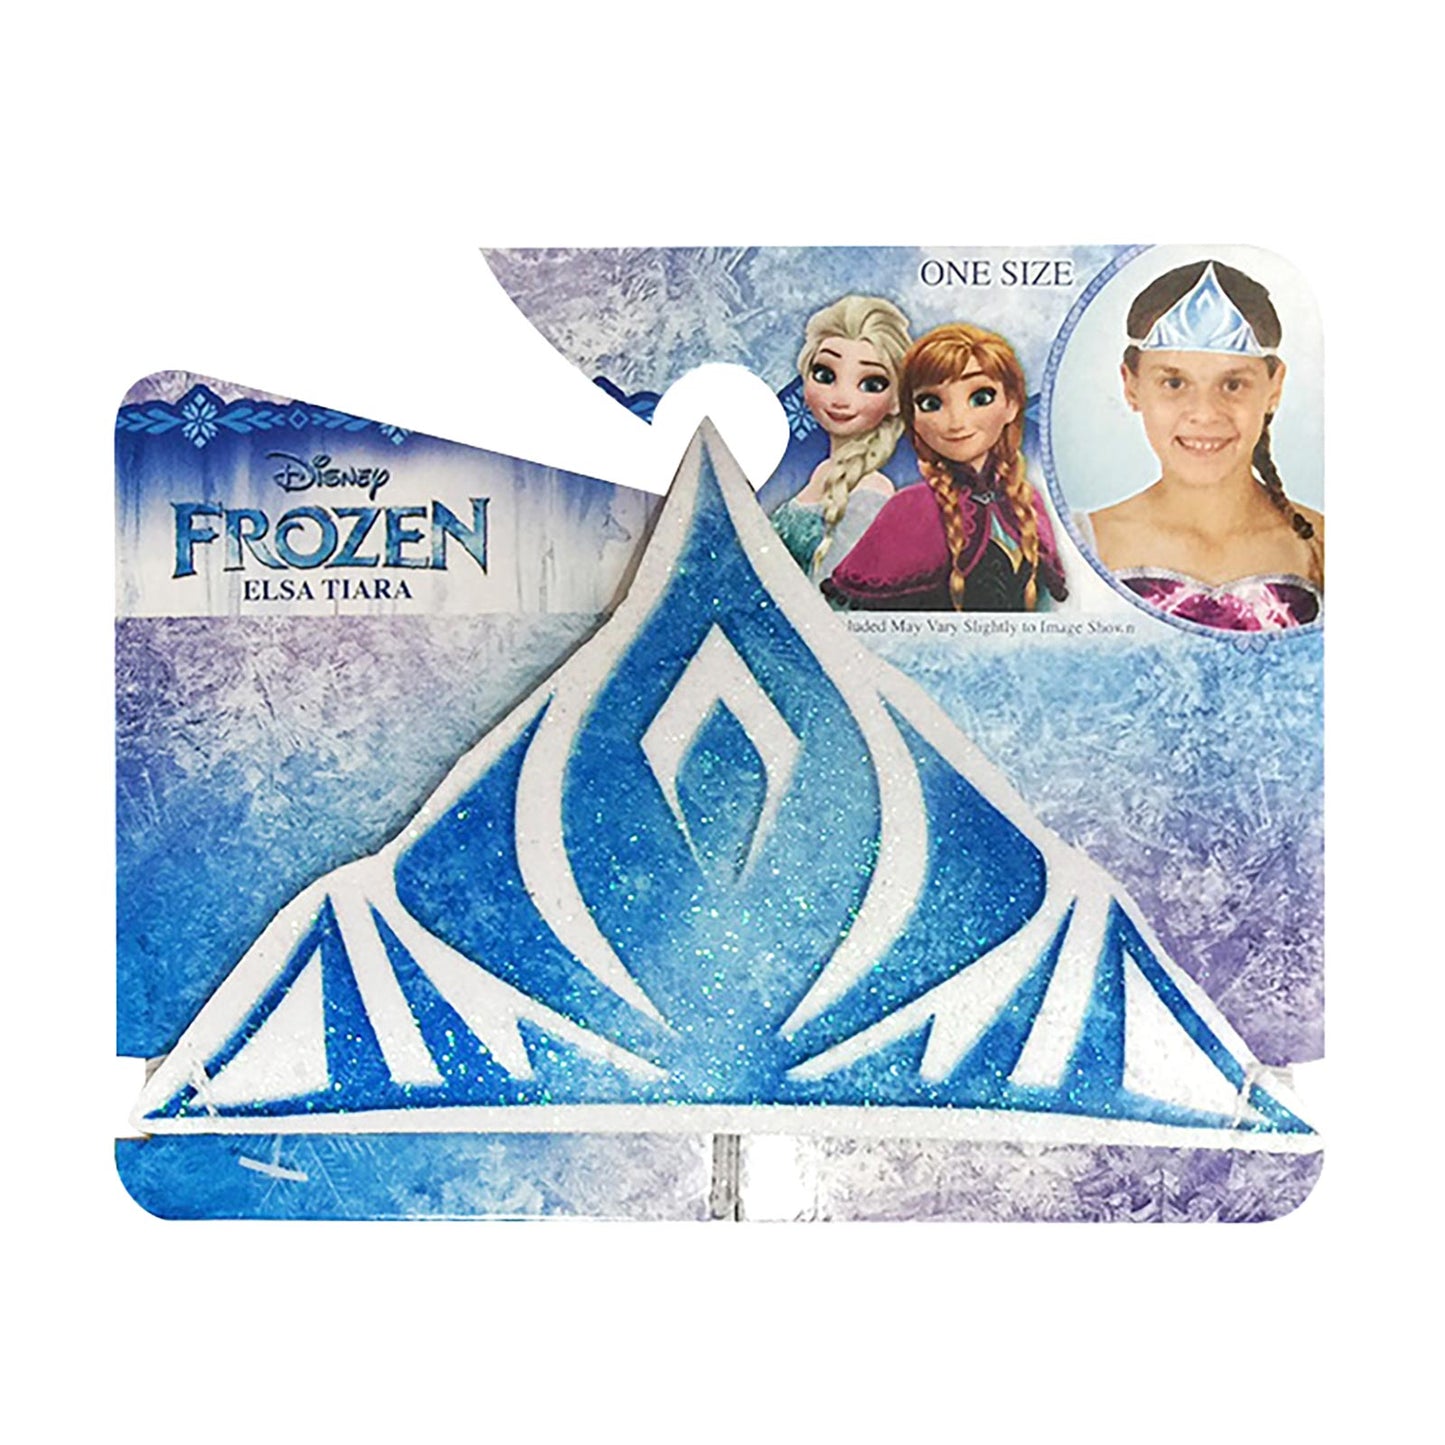 Frozen Elsa Fabric Tiara Child Girls costume accessory crown